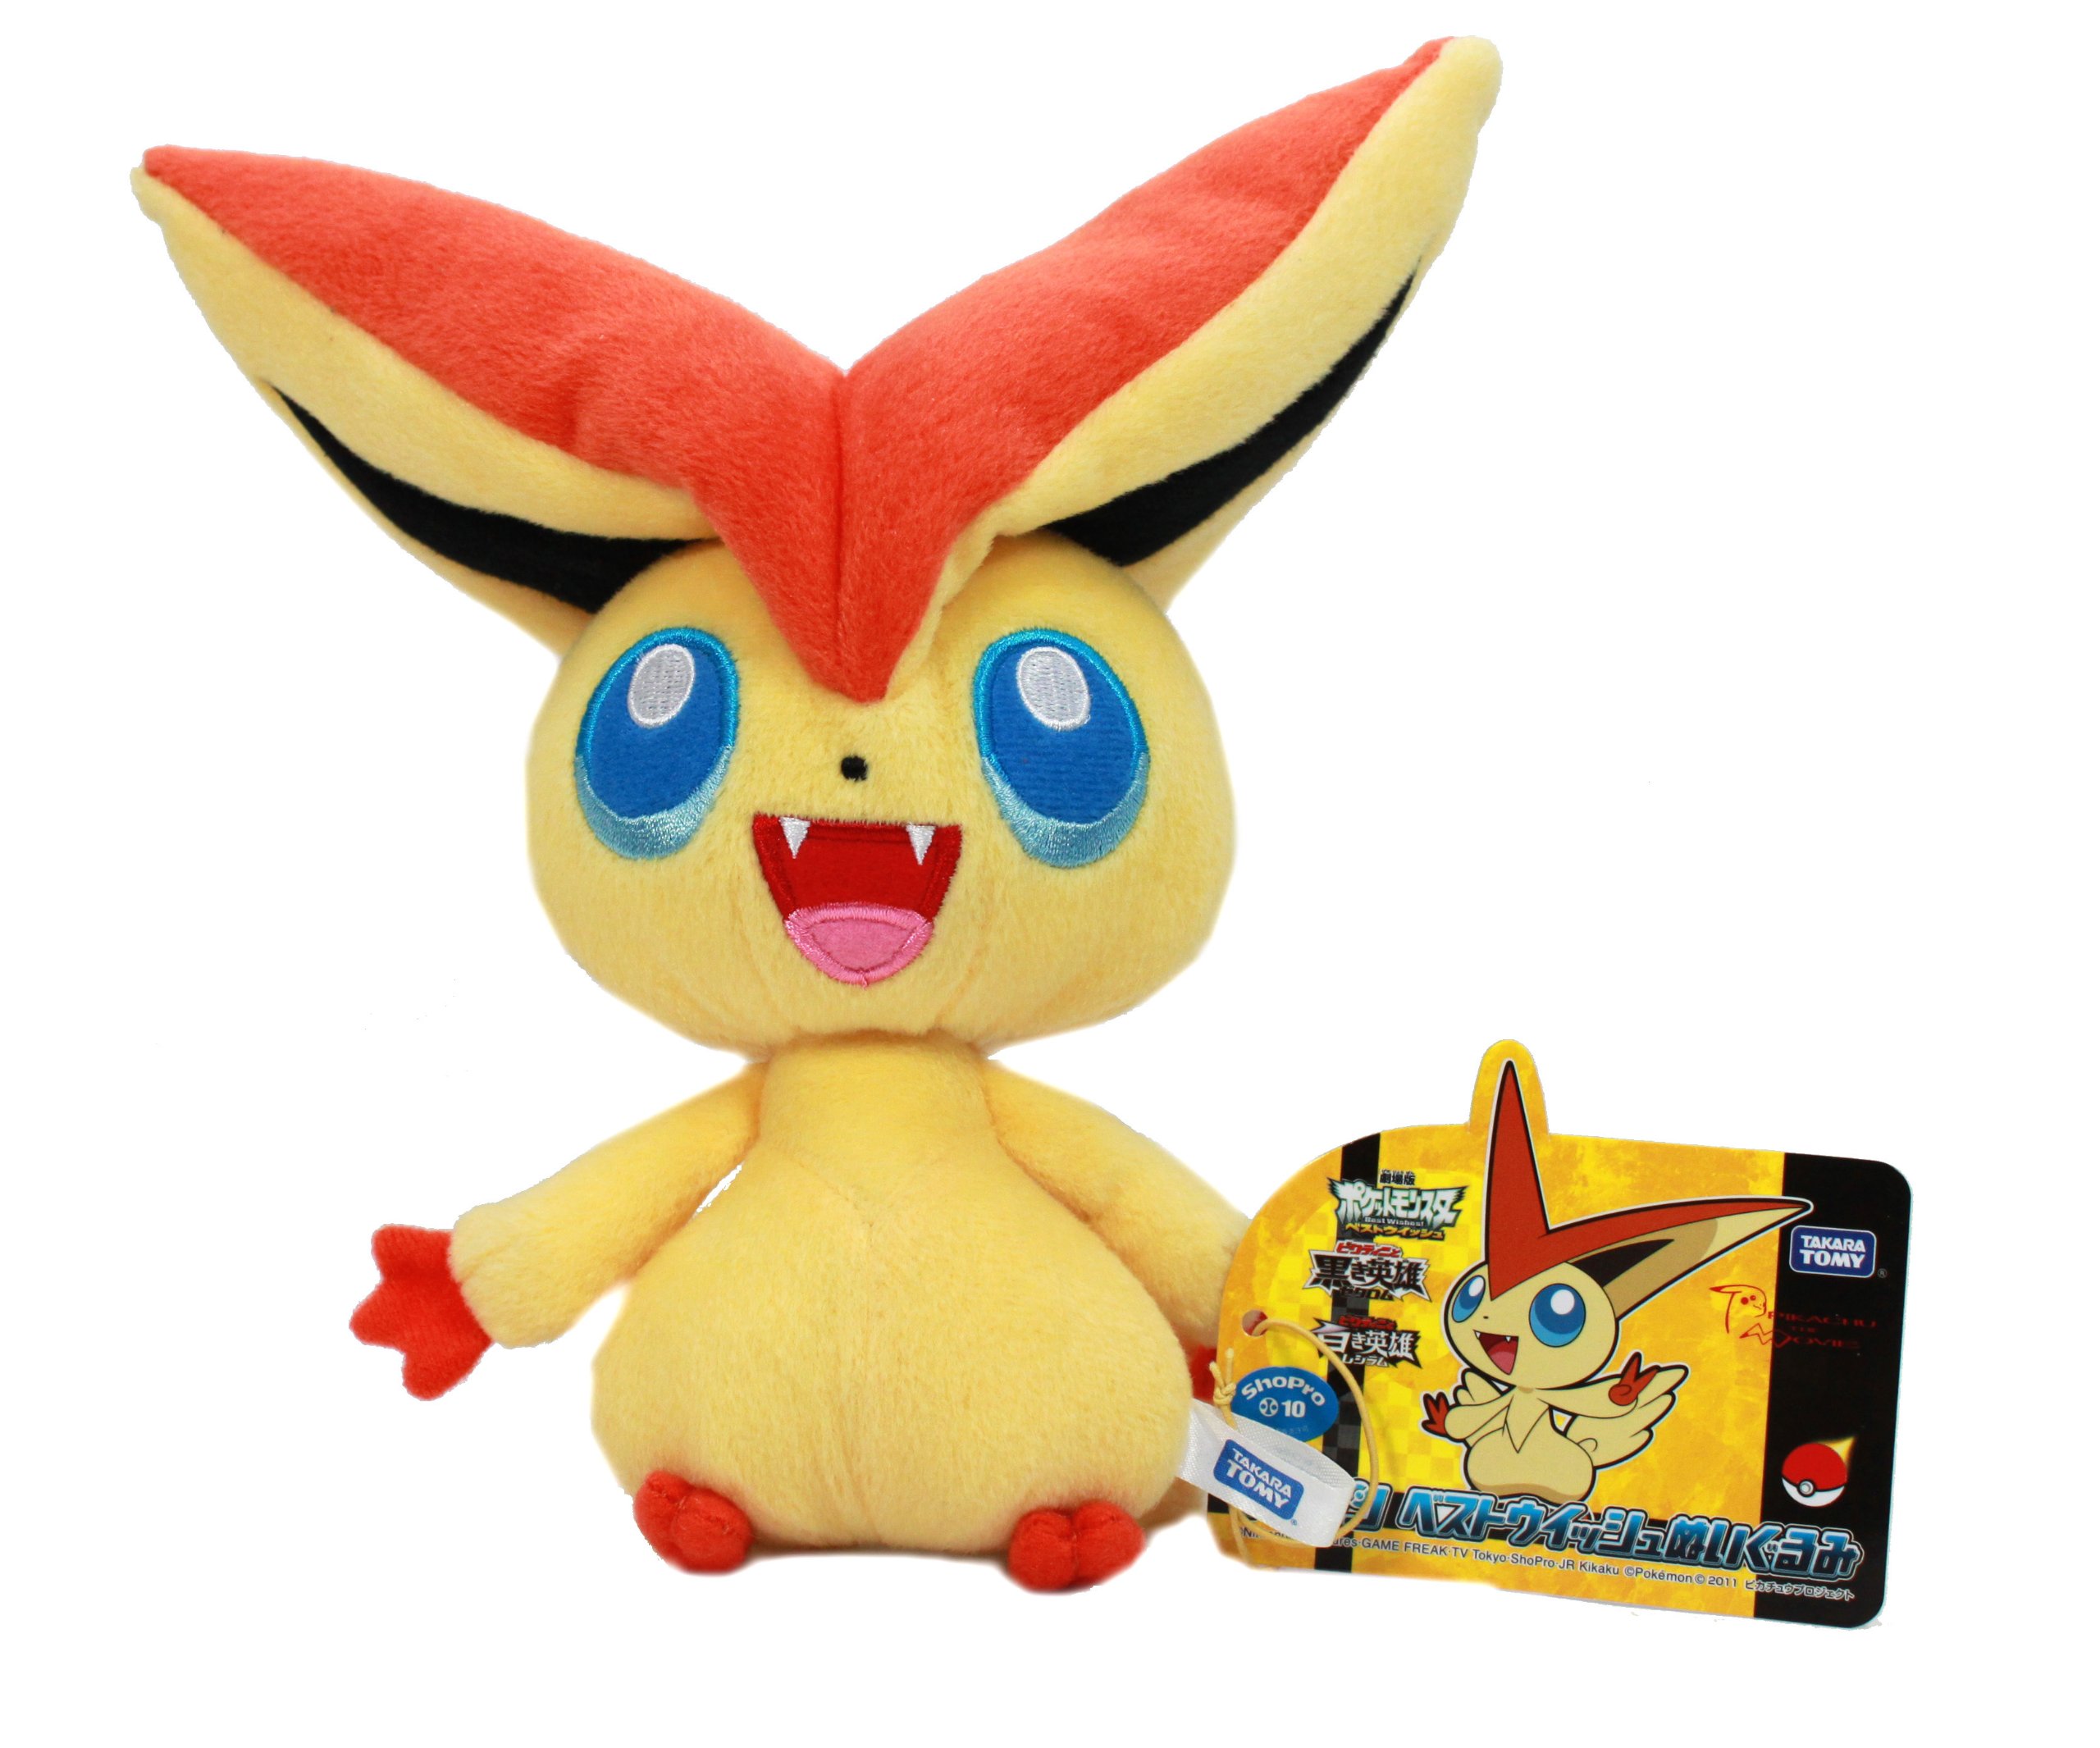 Need a Legendary Pokemon Plush Toy: Get the Adorable Victini Plush on Amazon